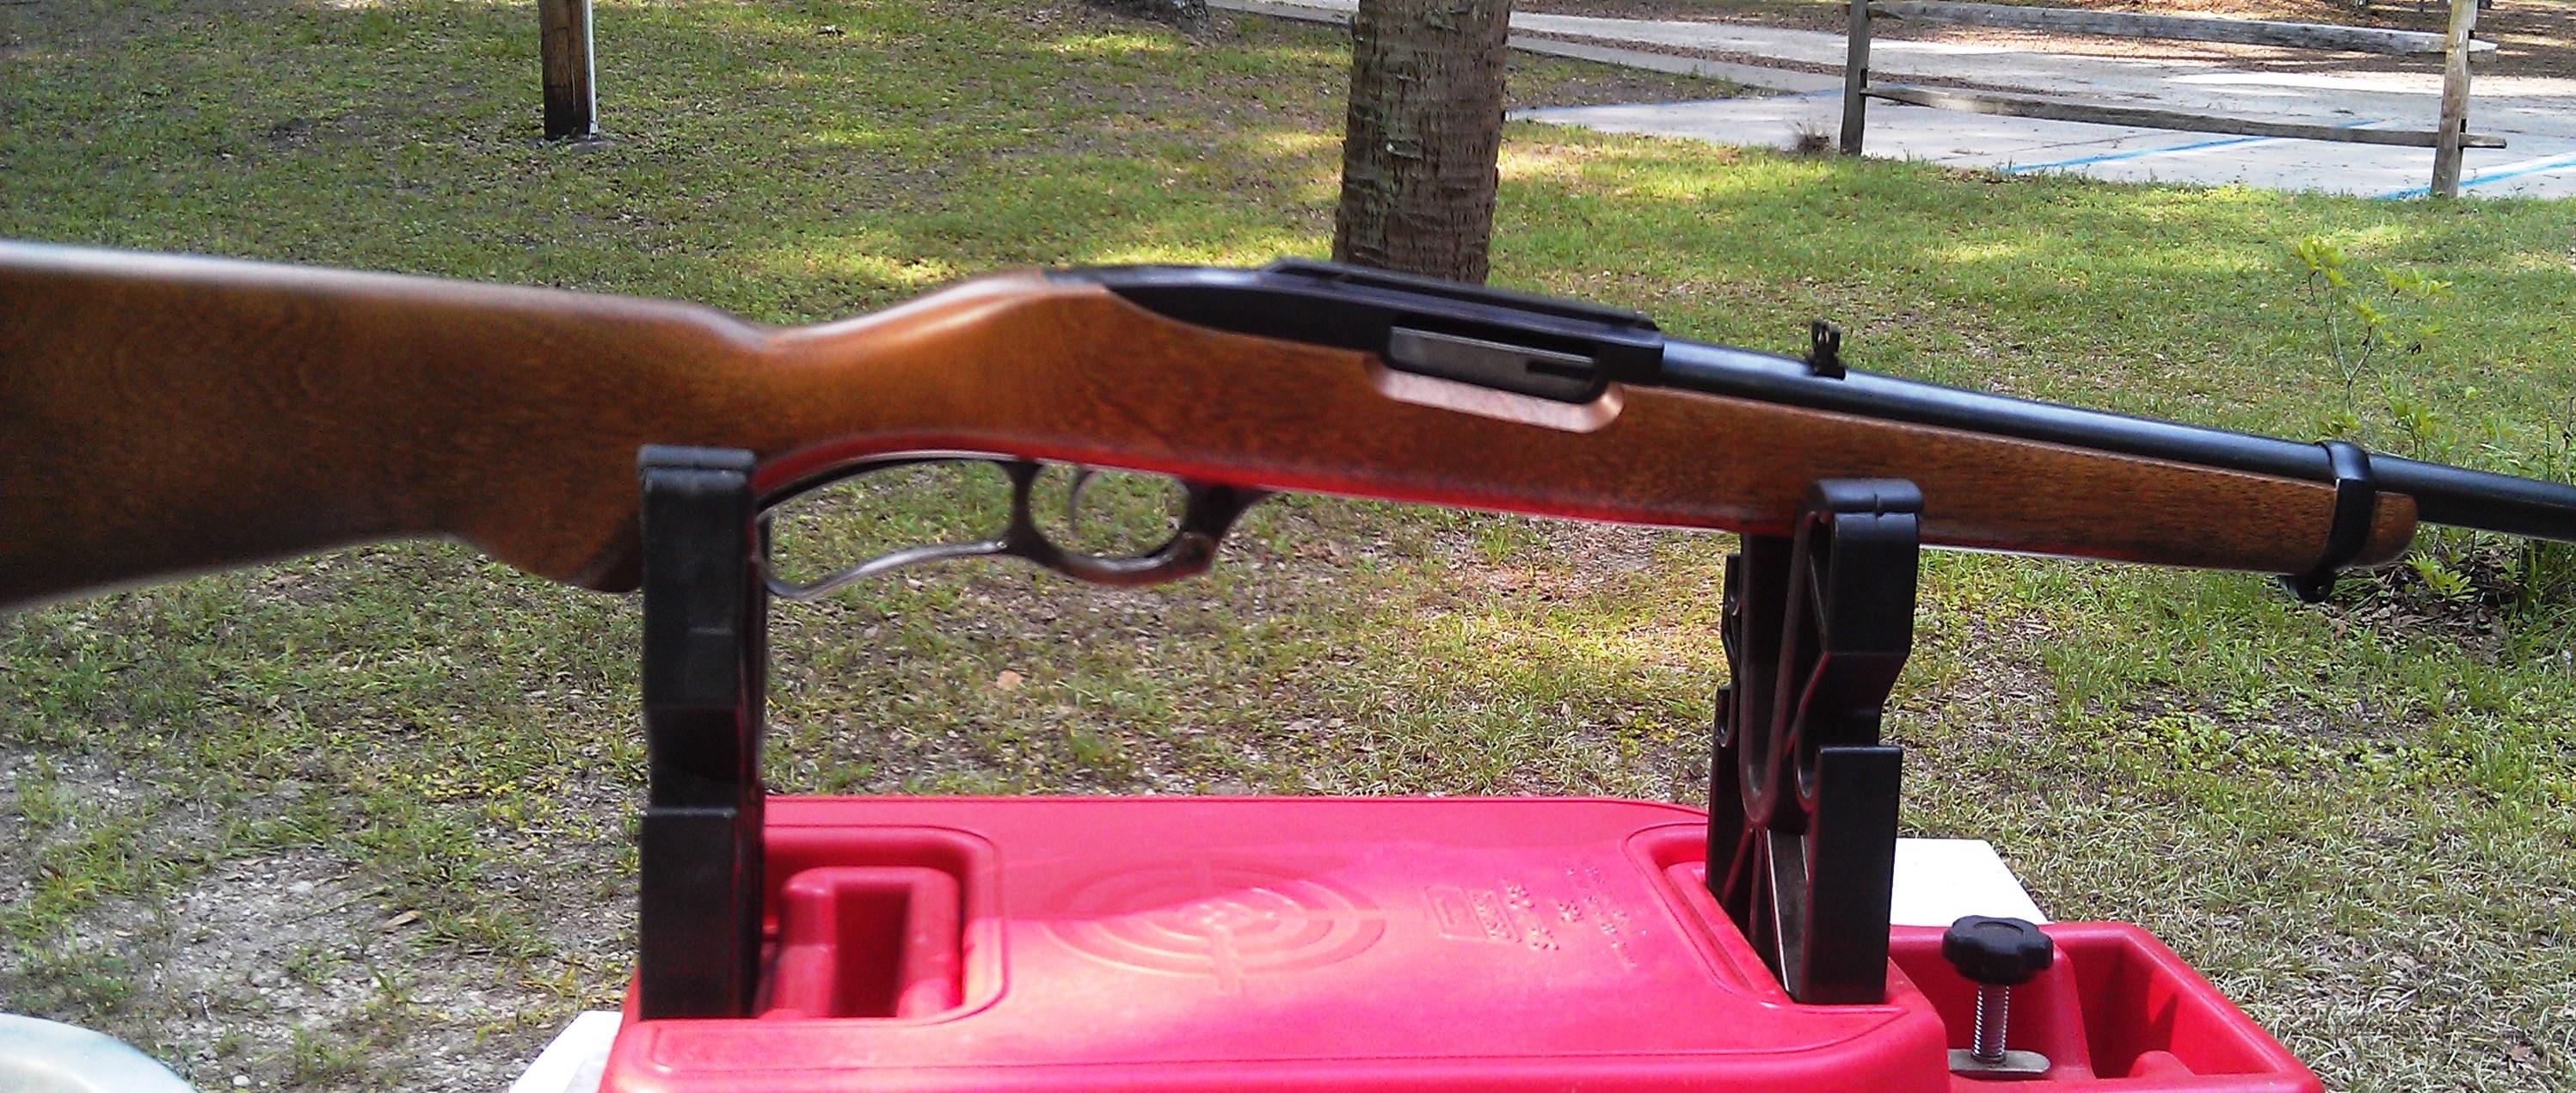 Ruger 9644 Lever Action 44 Magnum For Sale At